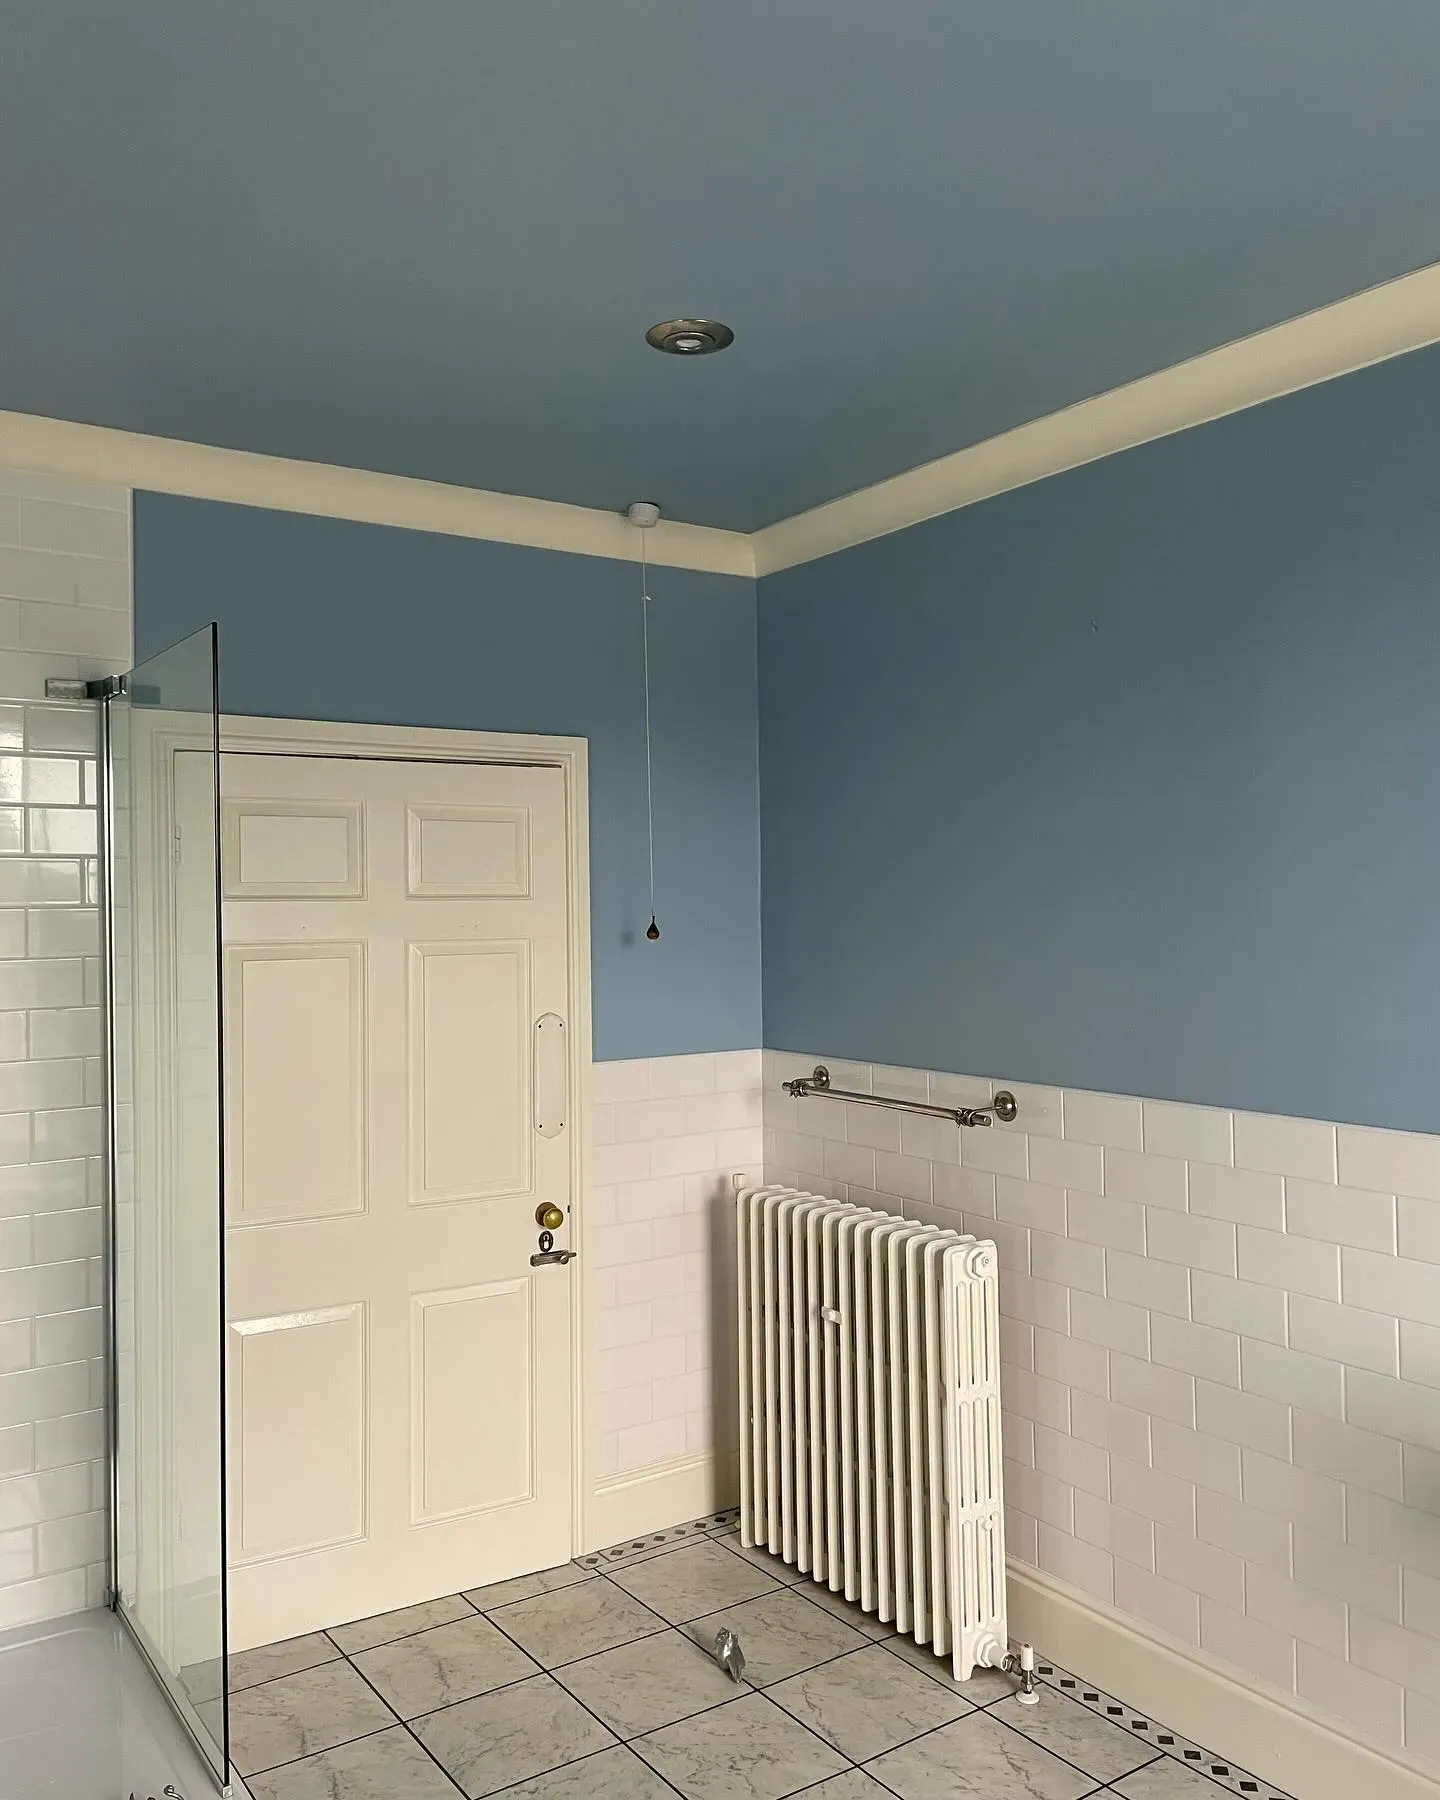 Lulworth Blue bathroom color